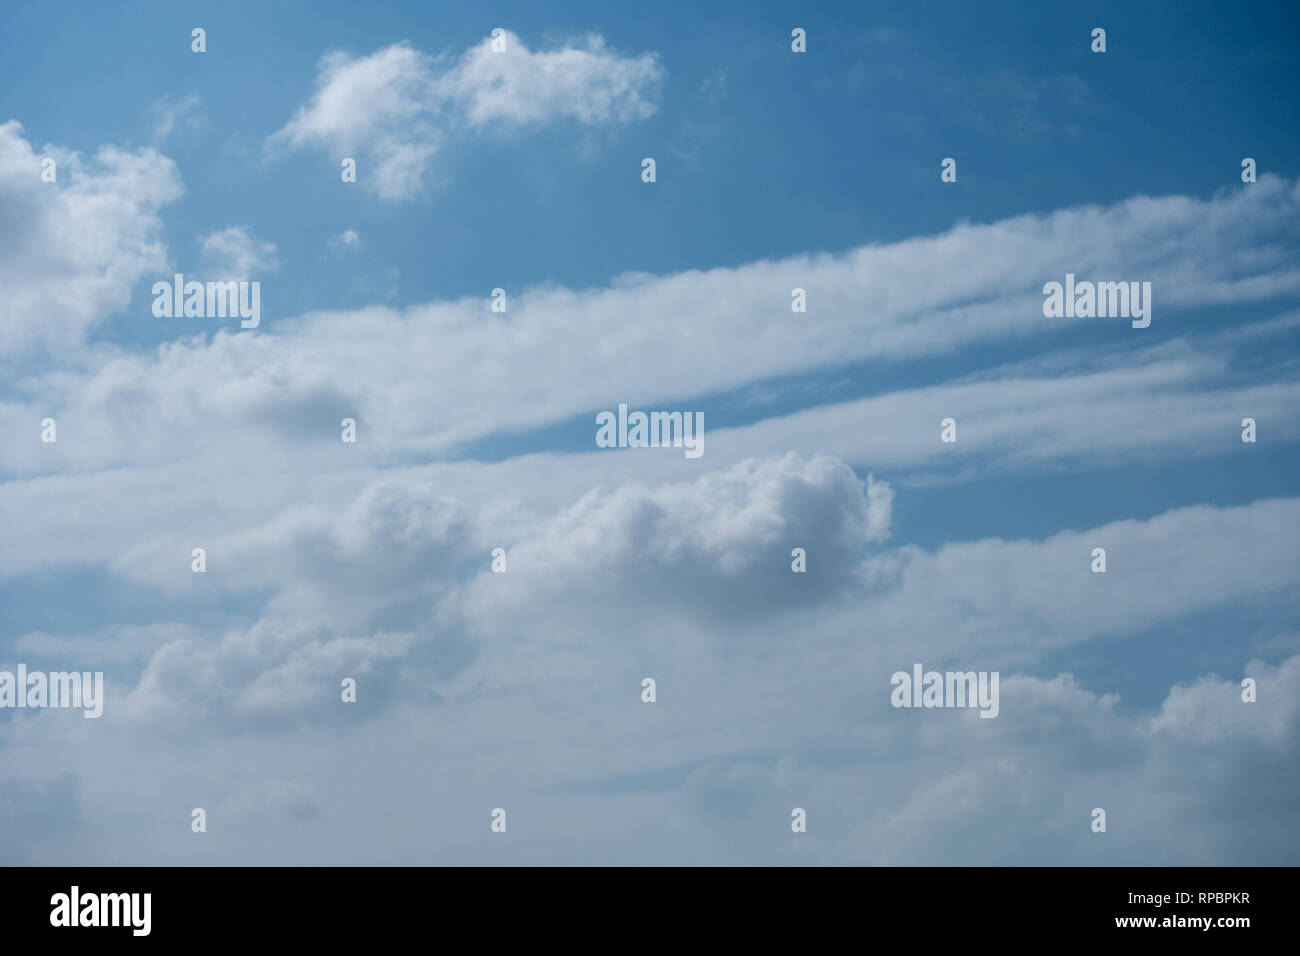 Wonder full pattern of white Clouds Stock Photo